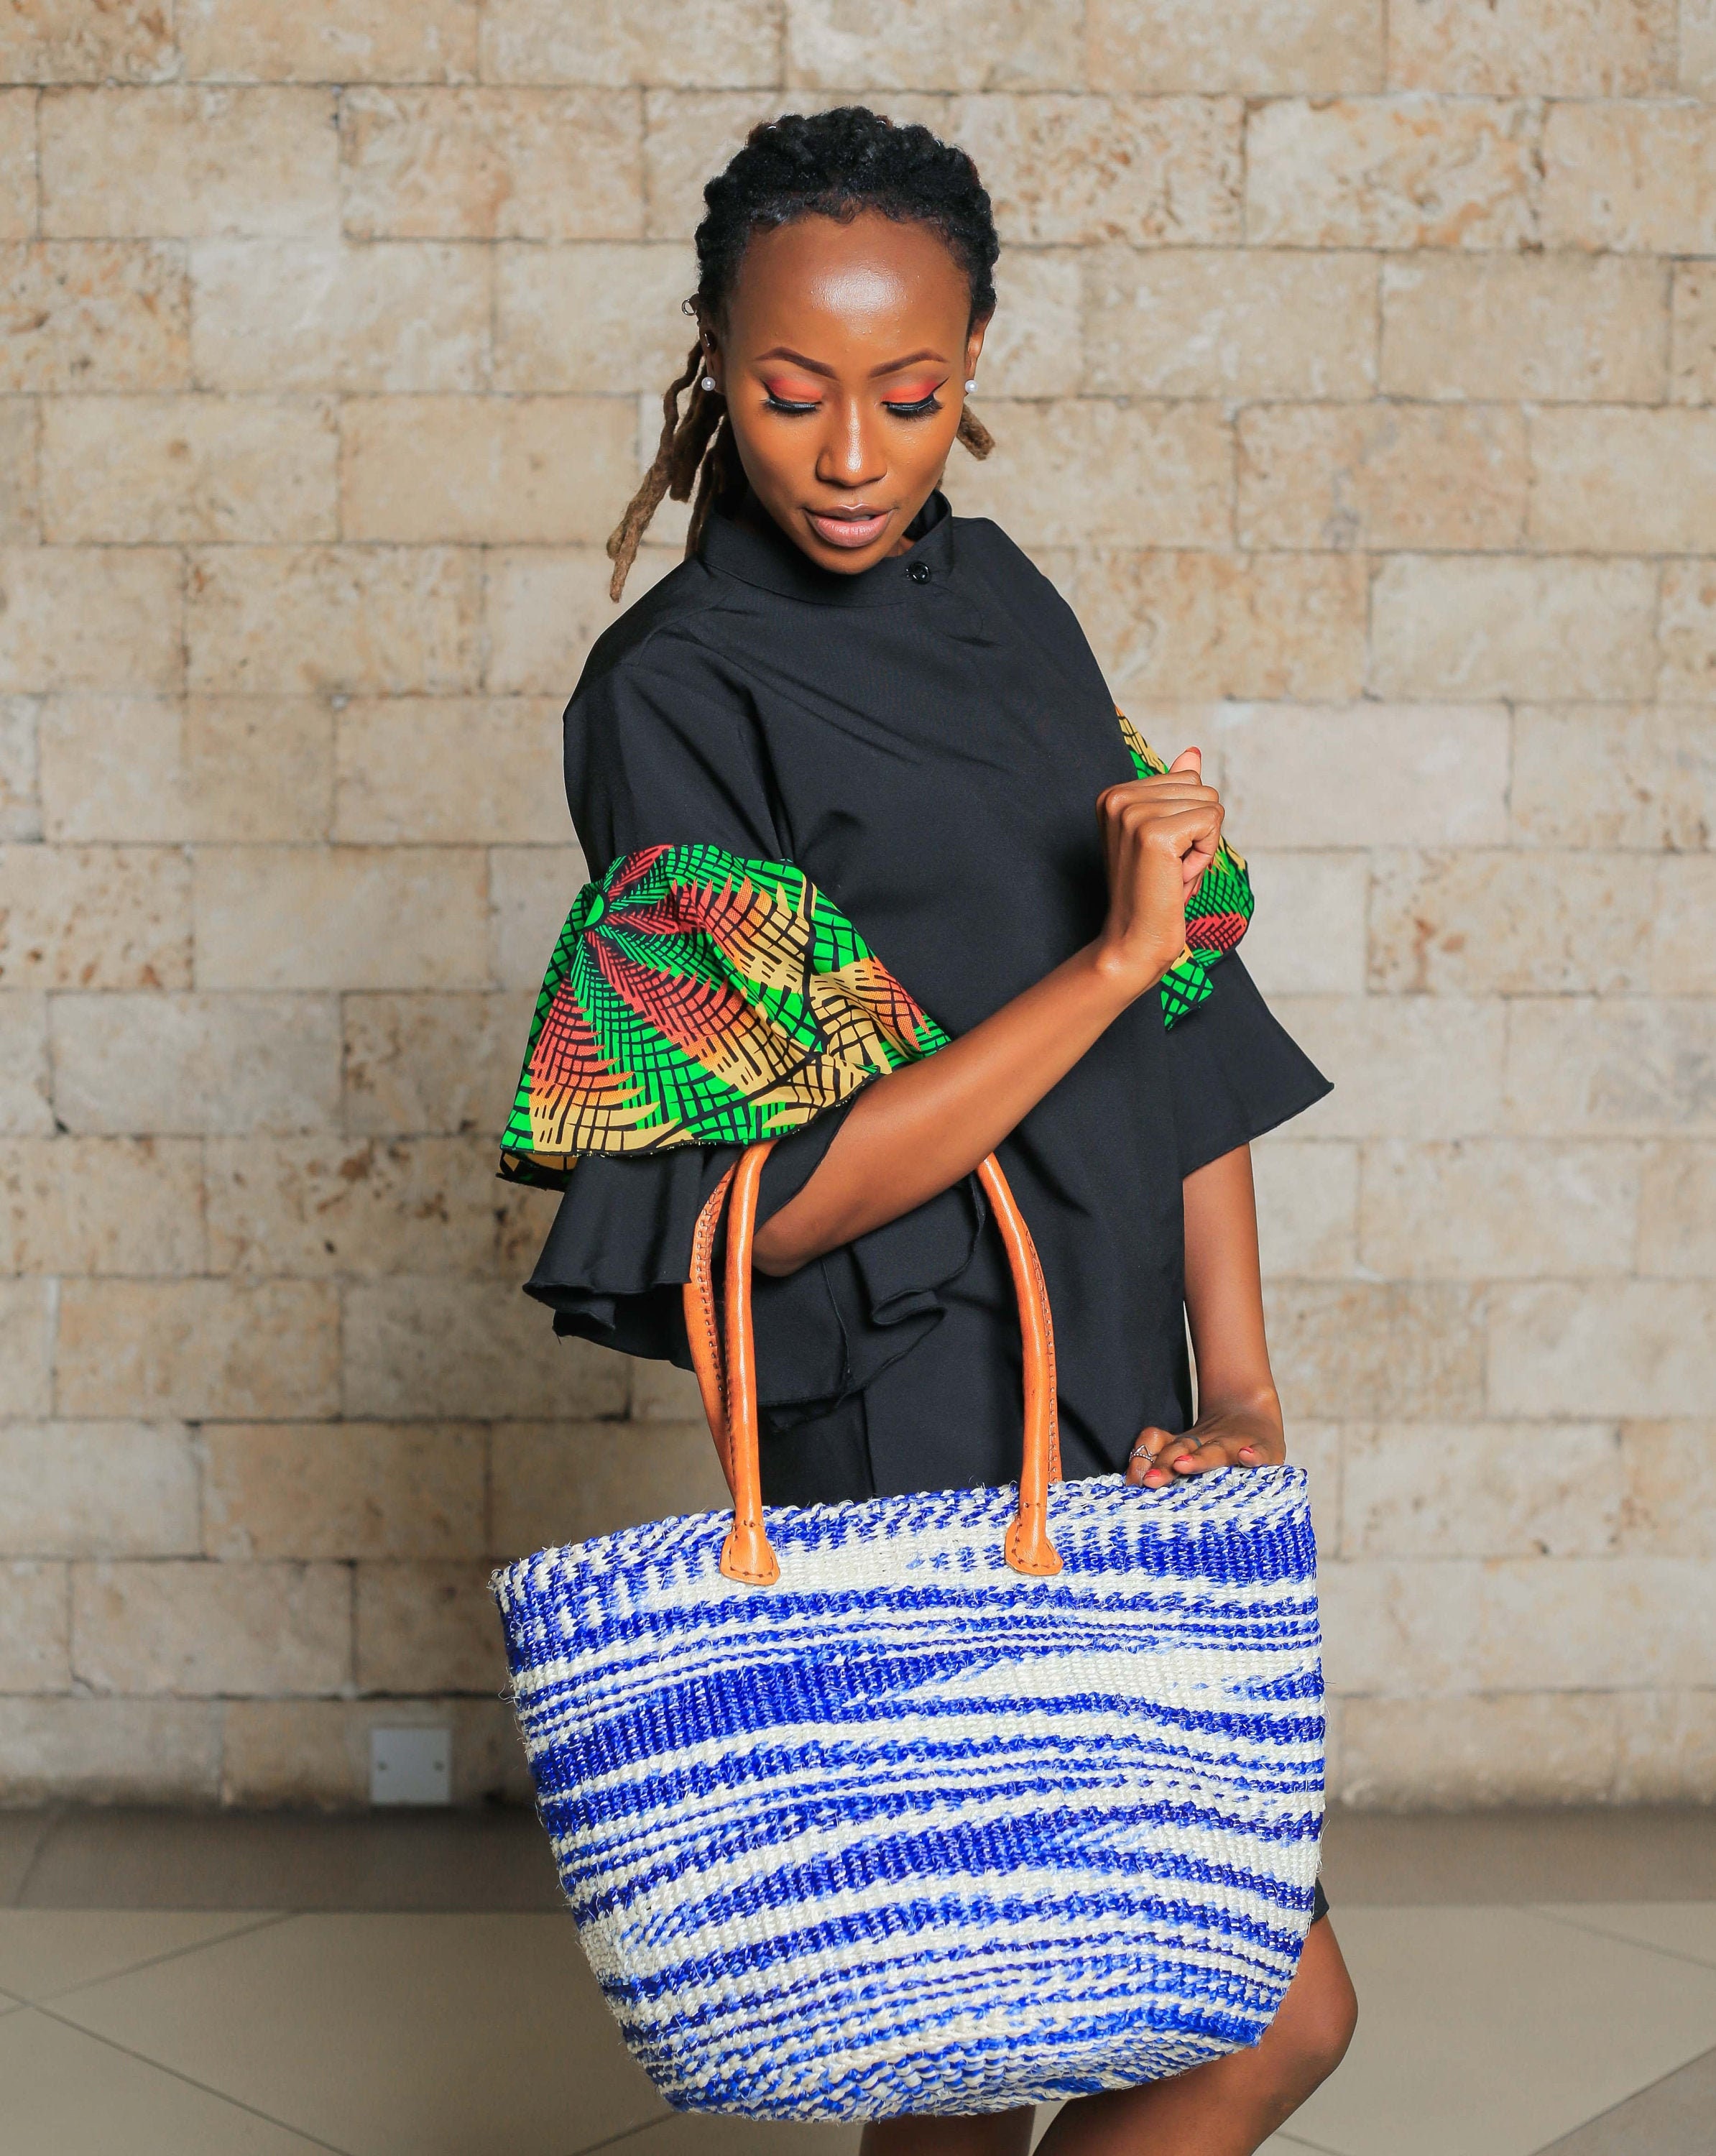 Blue & White Tote Bag Kiondo Bag African Tote Bag Handbag | Etsy